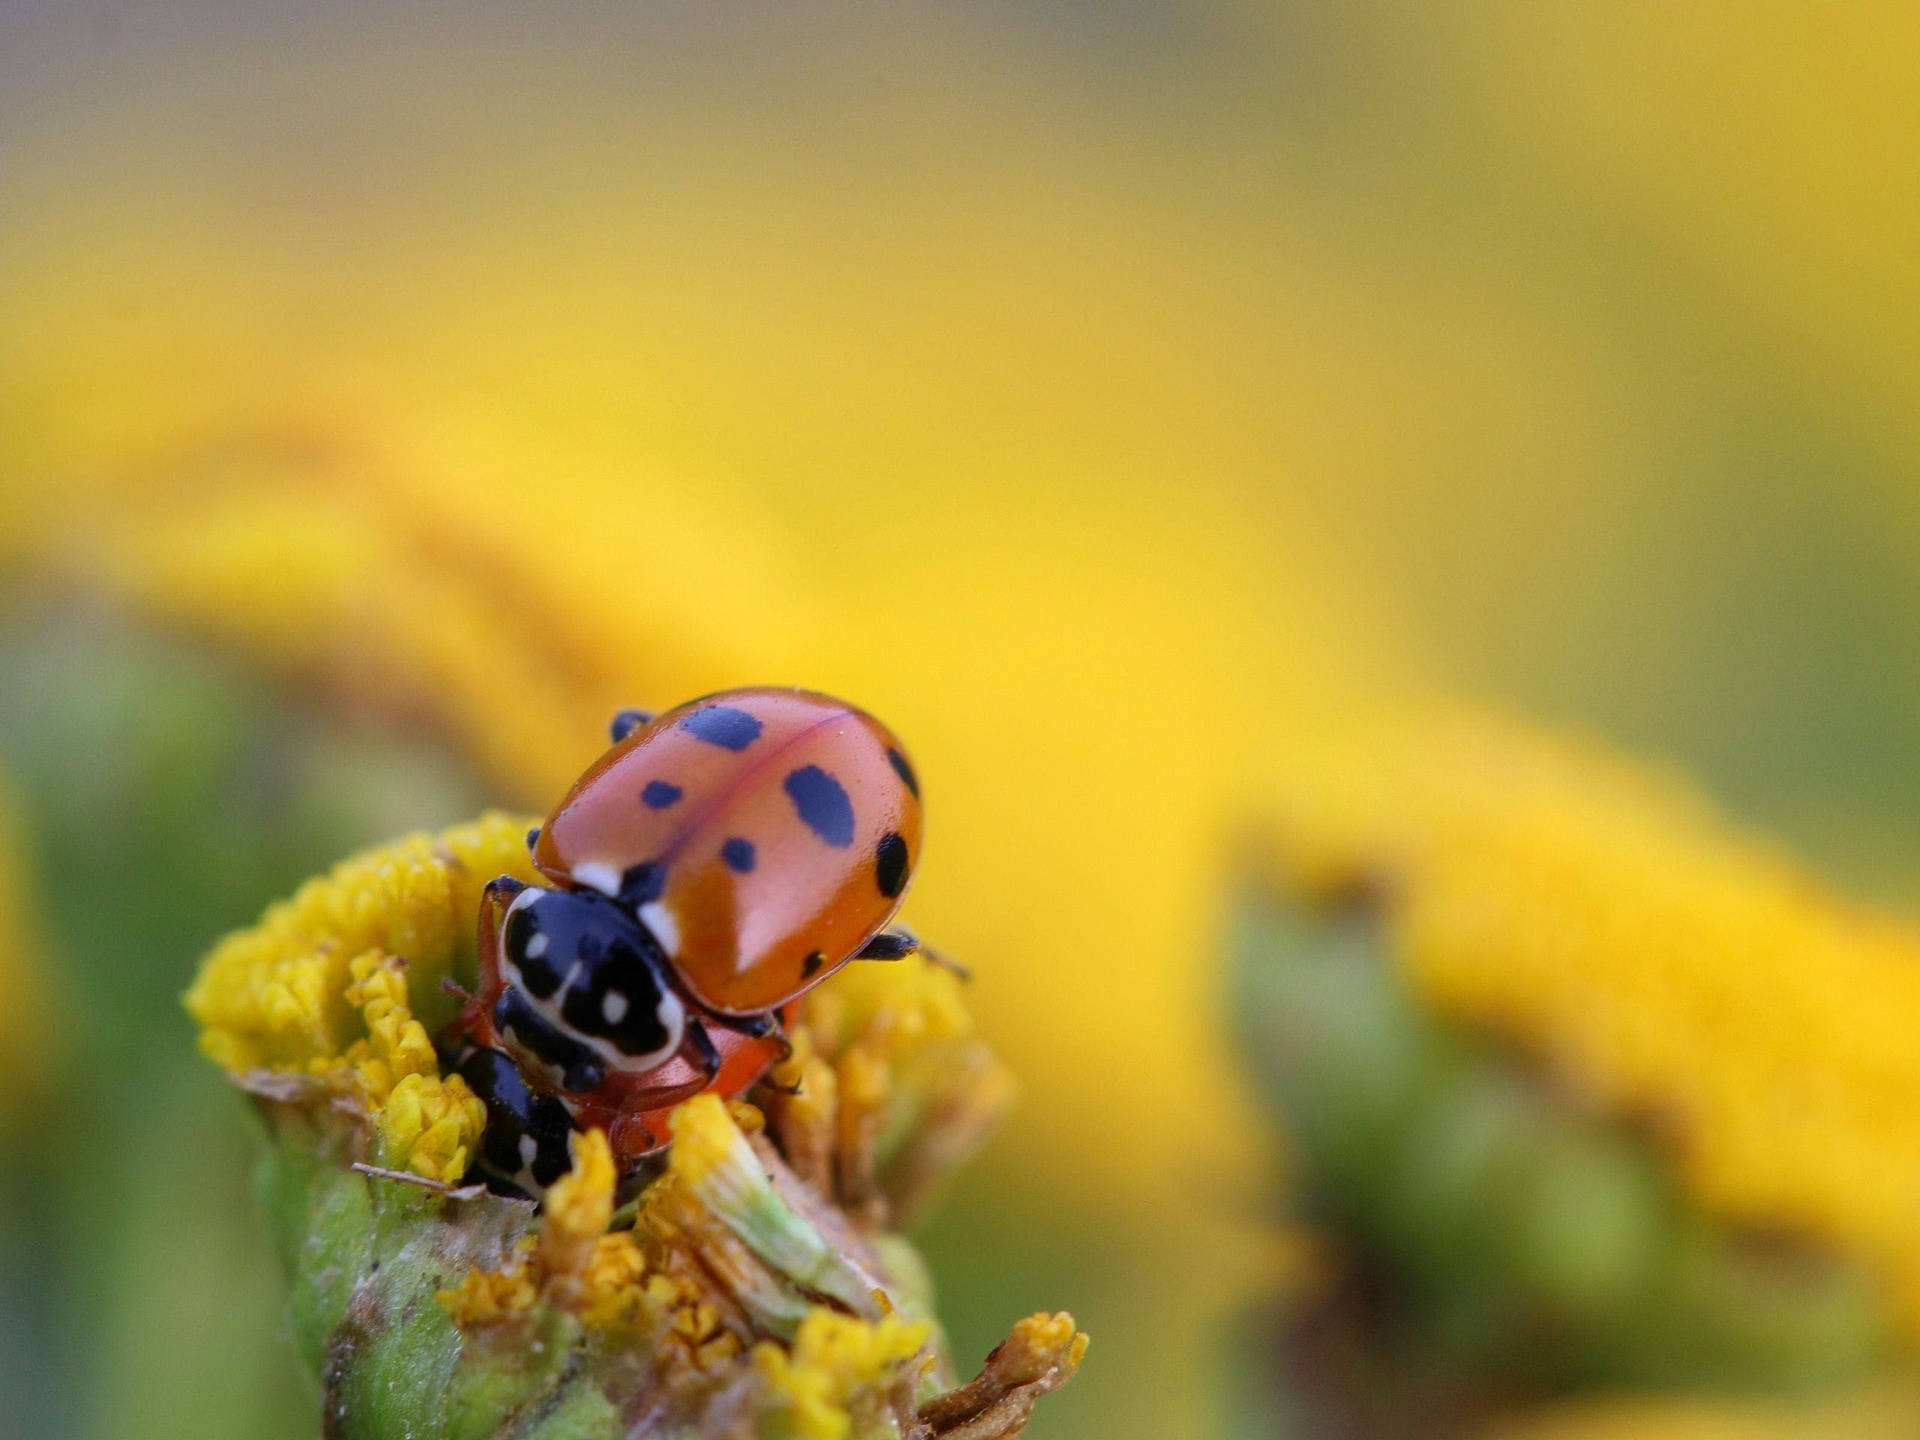 Insect Ladybug On Yellow Flower